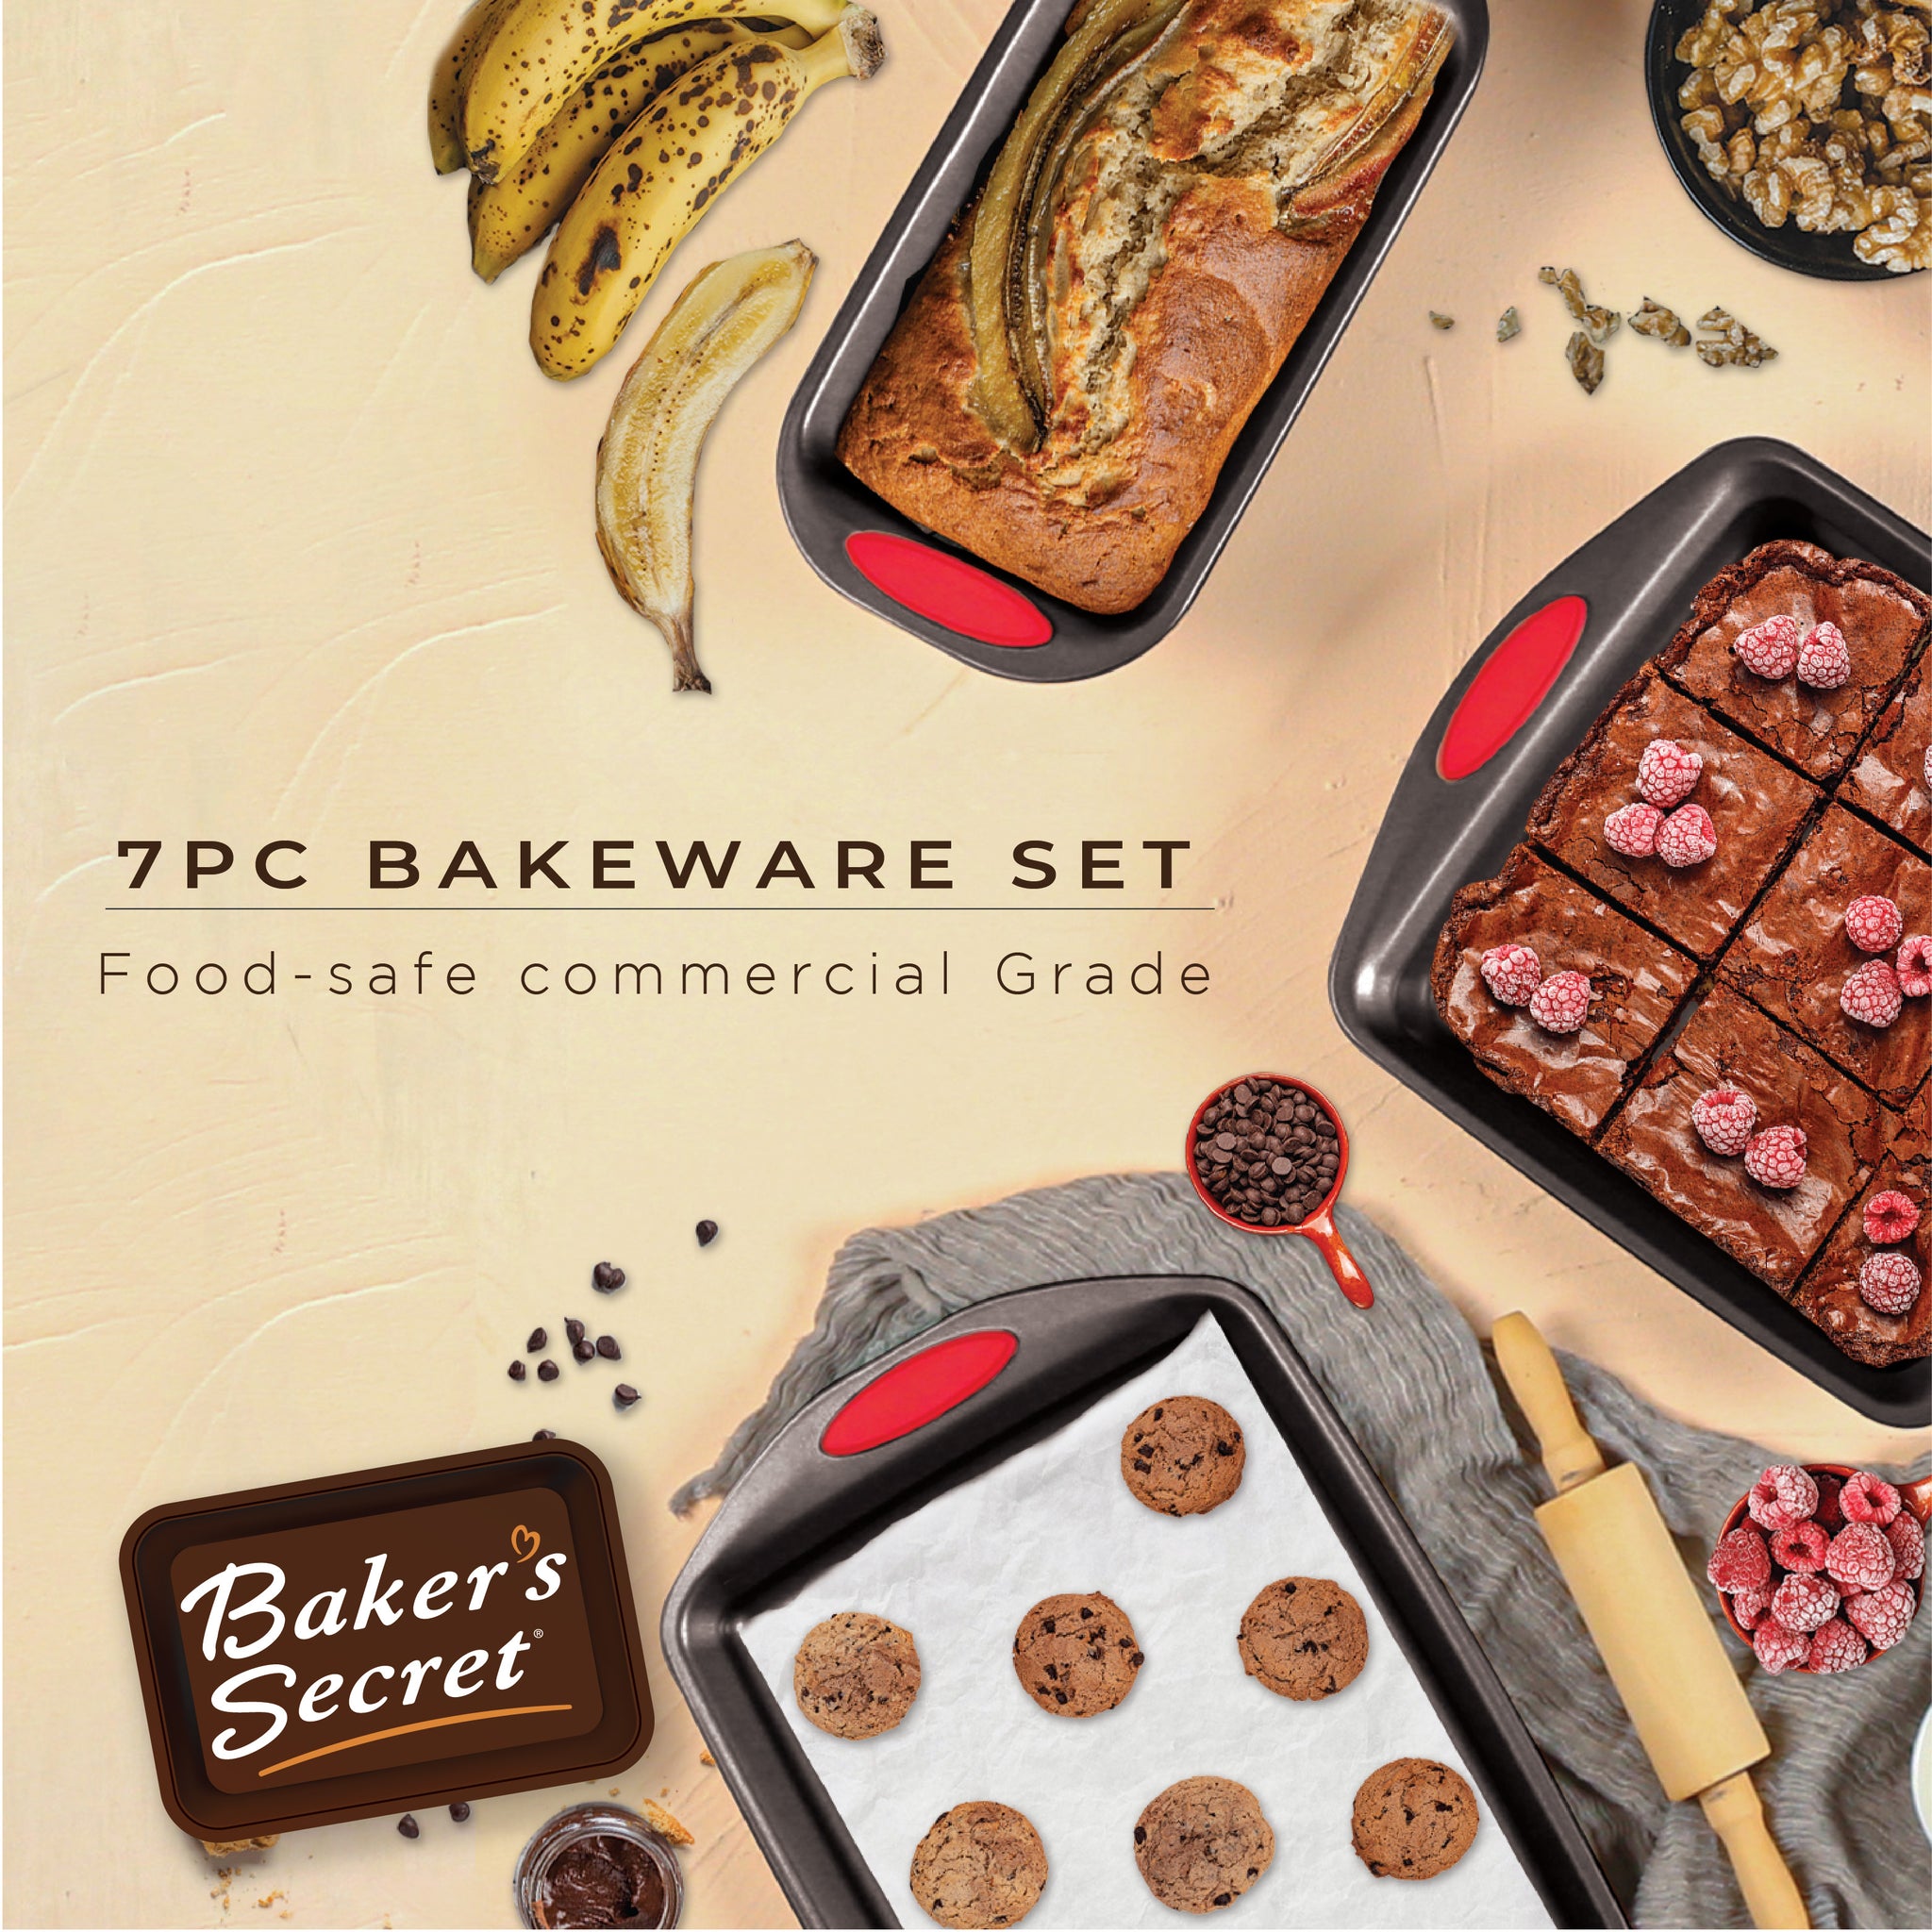 Baker's Secret 11-Piece Granite Nonstick Cookware Set